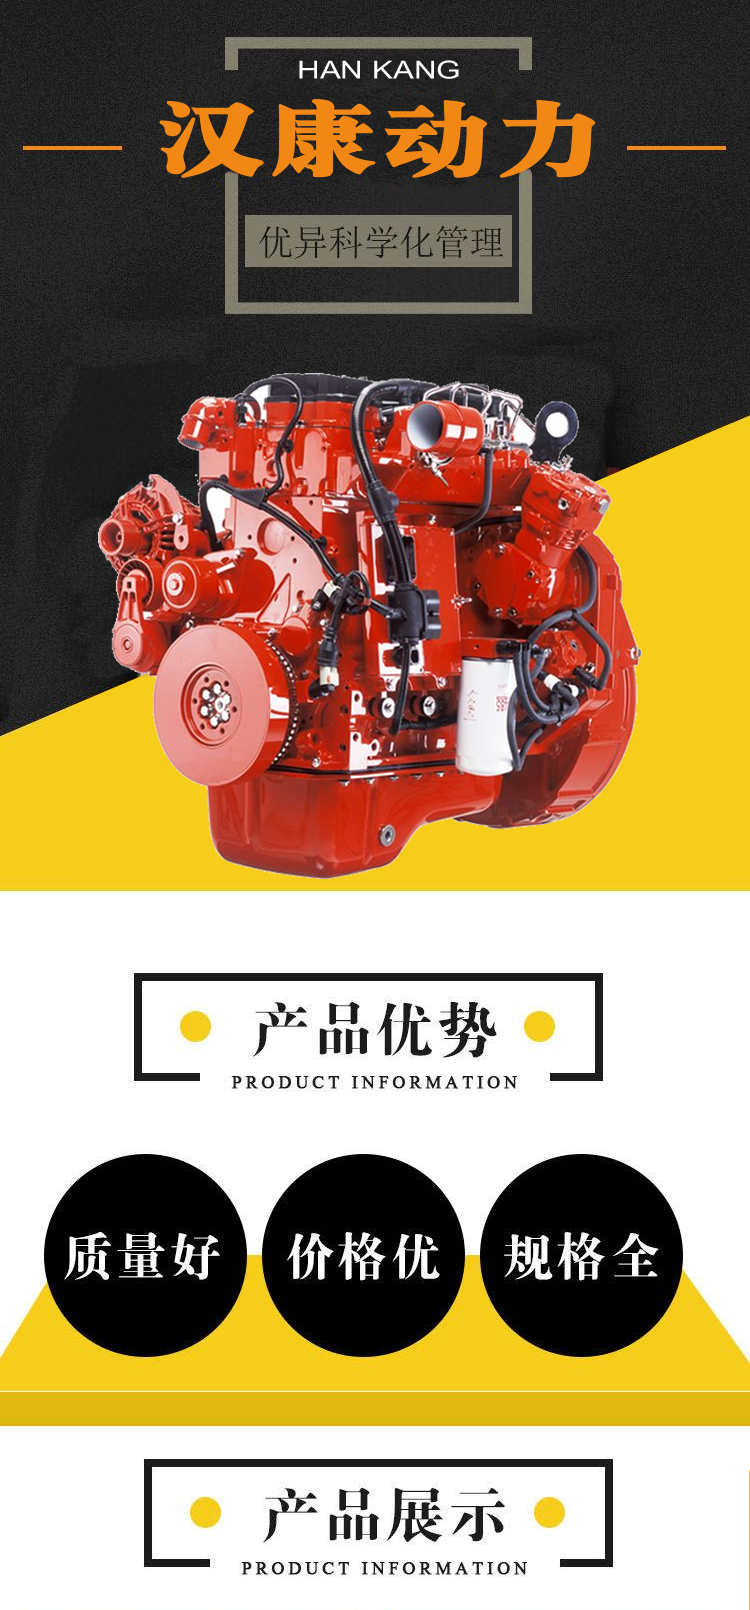 Chongqing Cummins K19/K38 Engine Accessories Oil Cooler Core 3635074/3627295